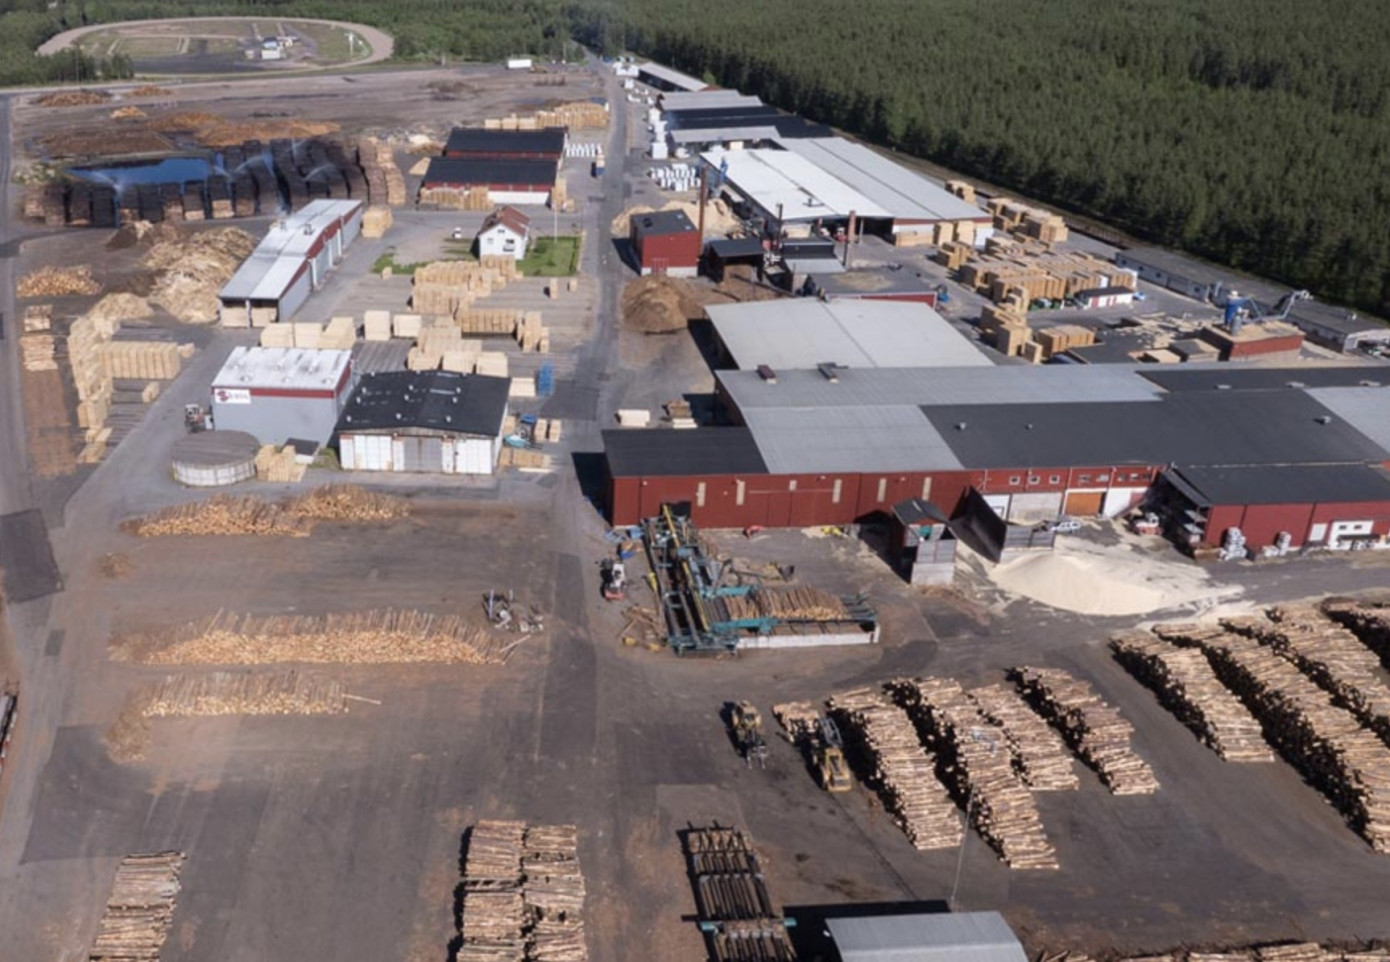 Vida to increase capacity of Bruza Sawmill in Hjältevad, Sweden from 175 million board feet to 240 million board feet